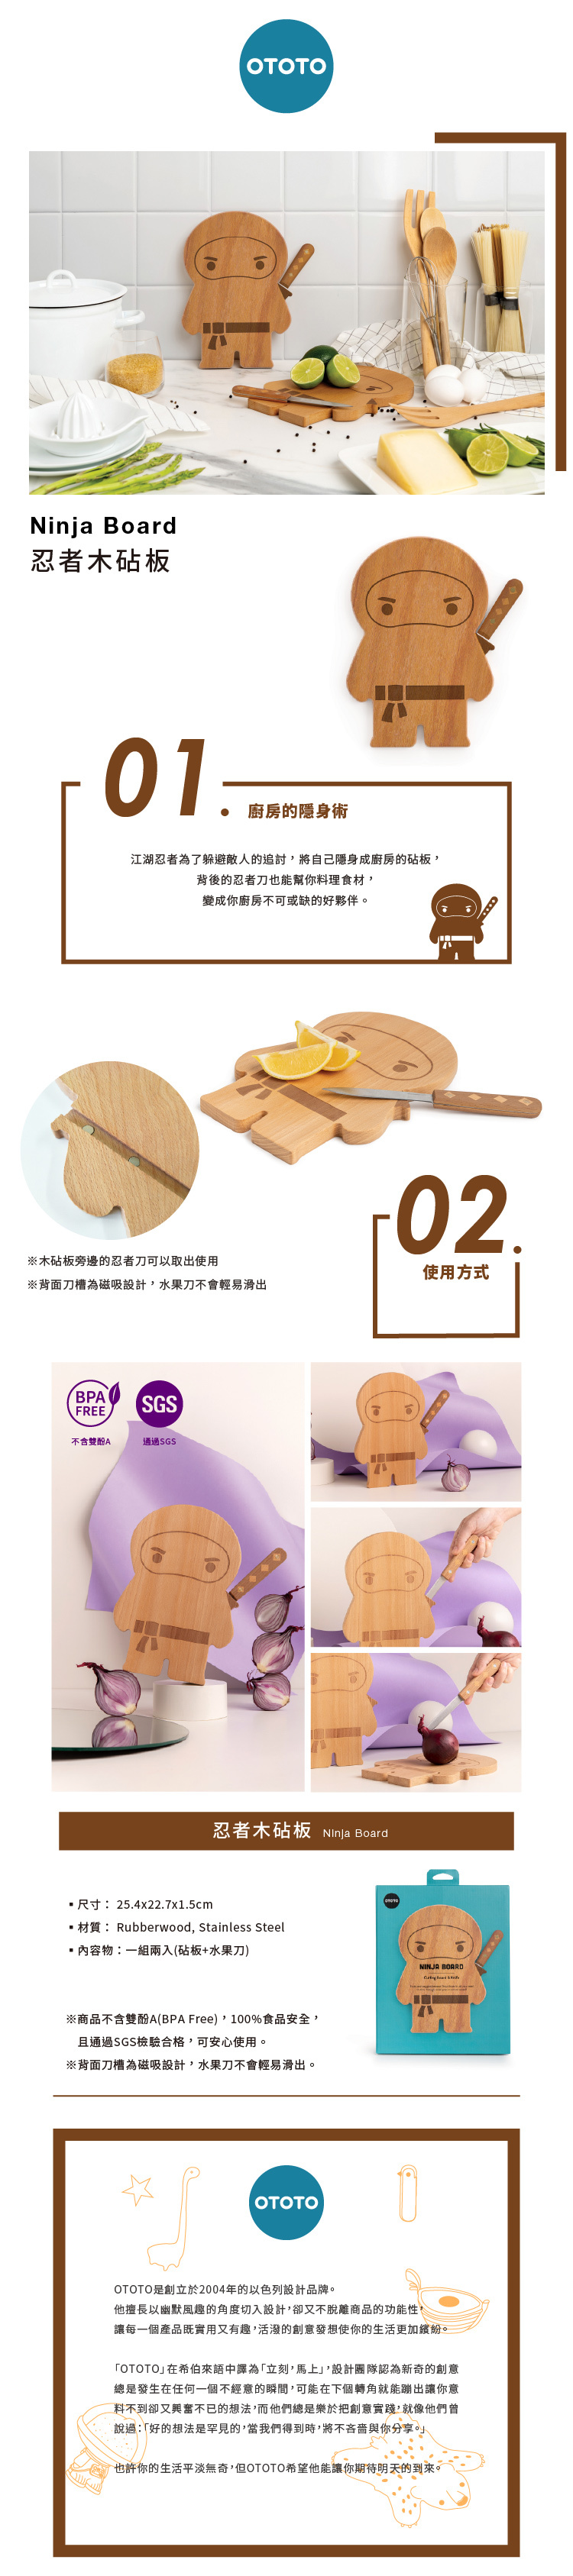 OTOTO pirate wood cutting board - Shop ototo Serving Trays